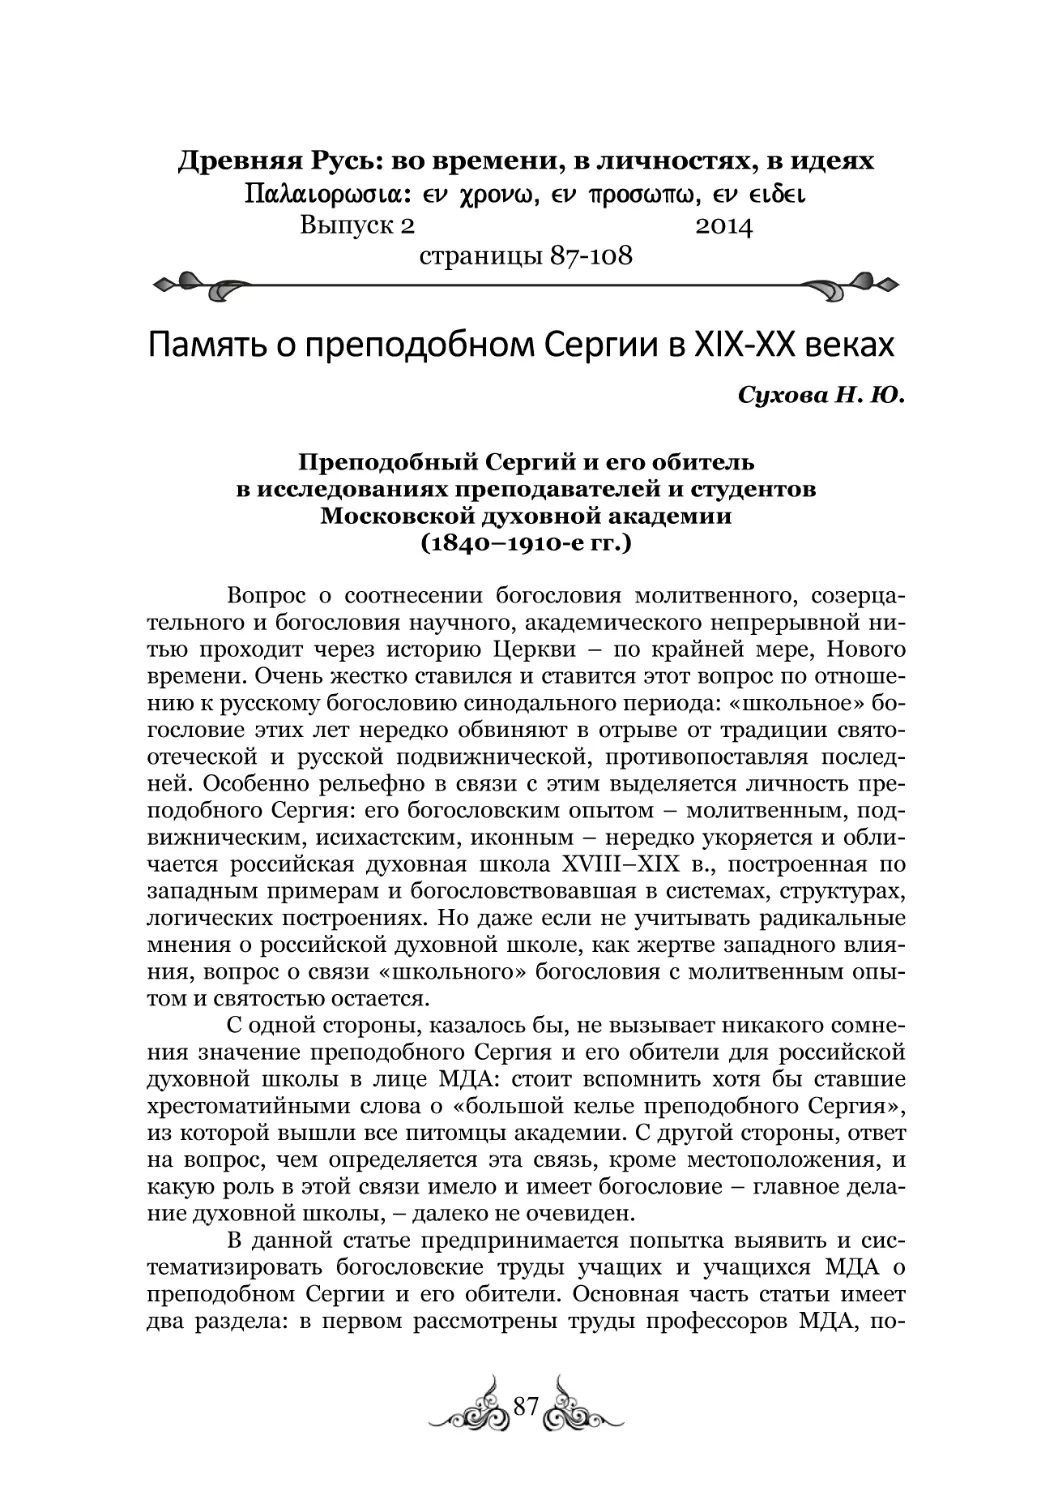 В2-2014 8. Сухова - к печати